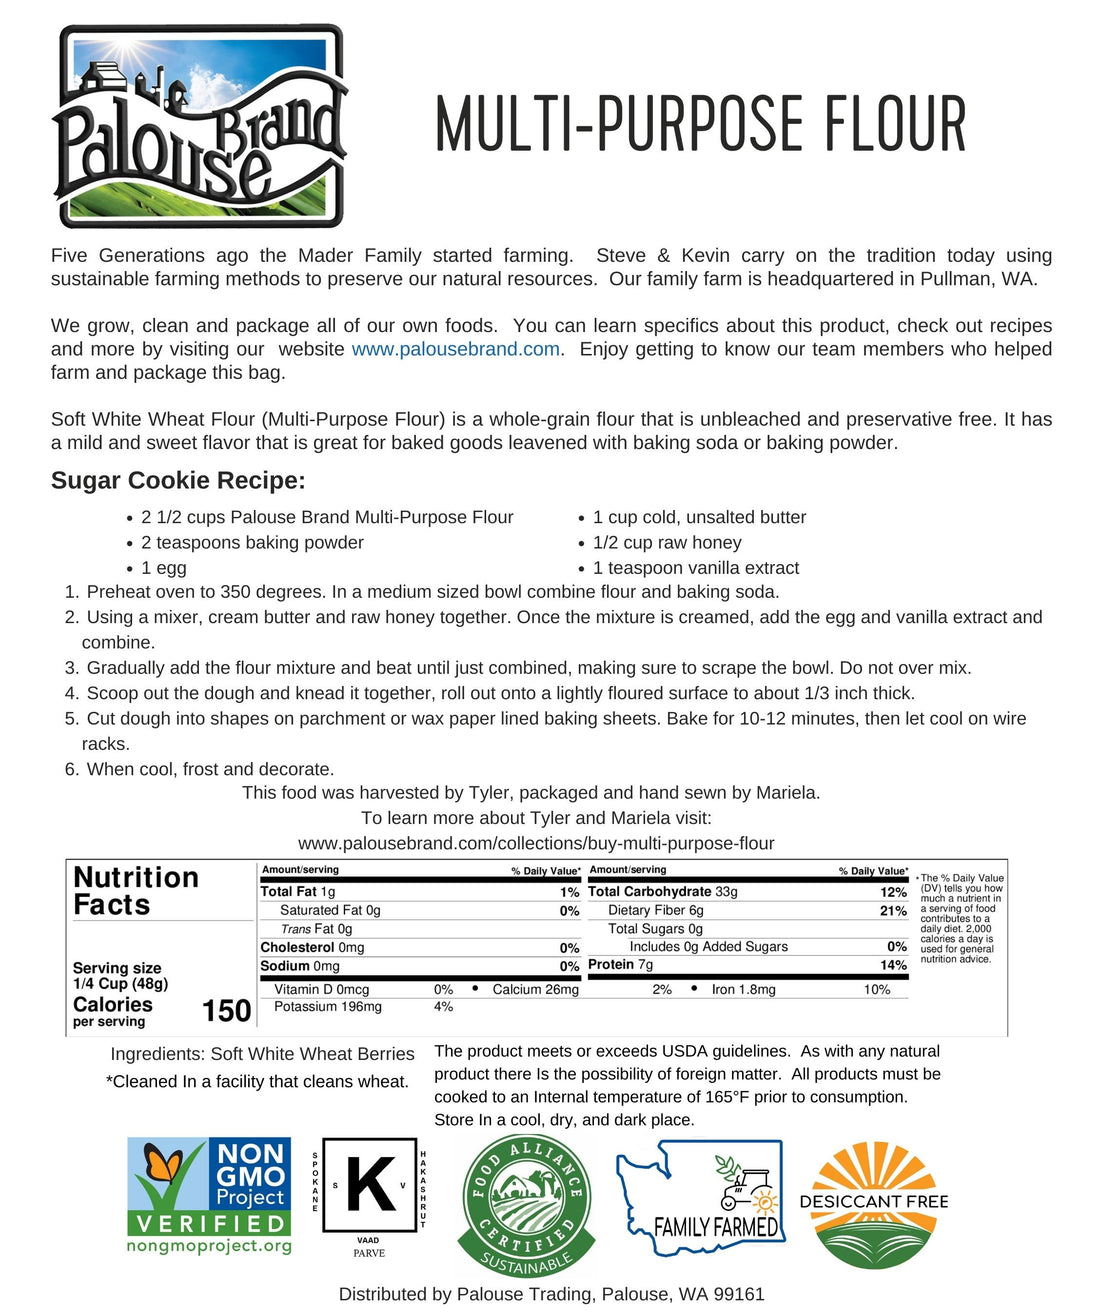 Multi-Purpose Flour Pack | 9 LBS